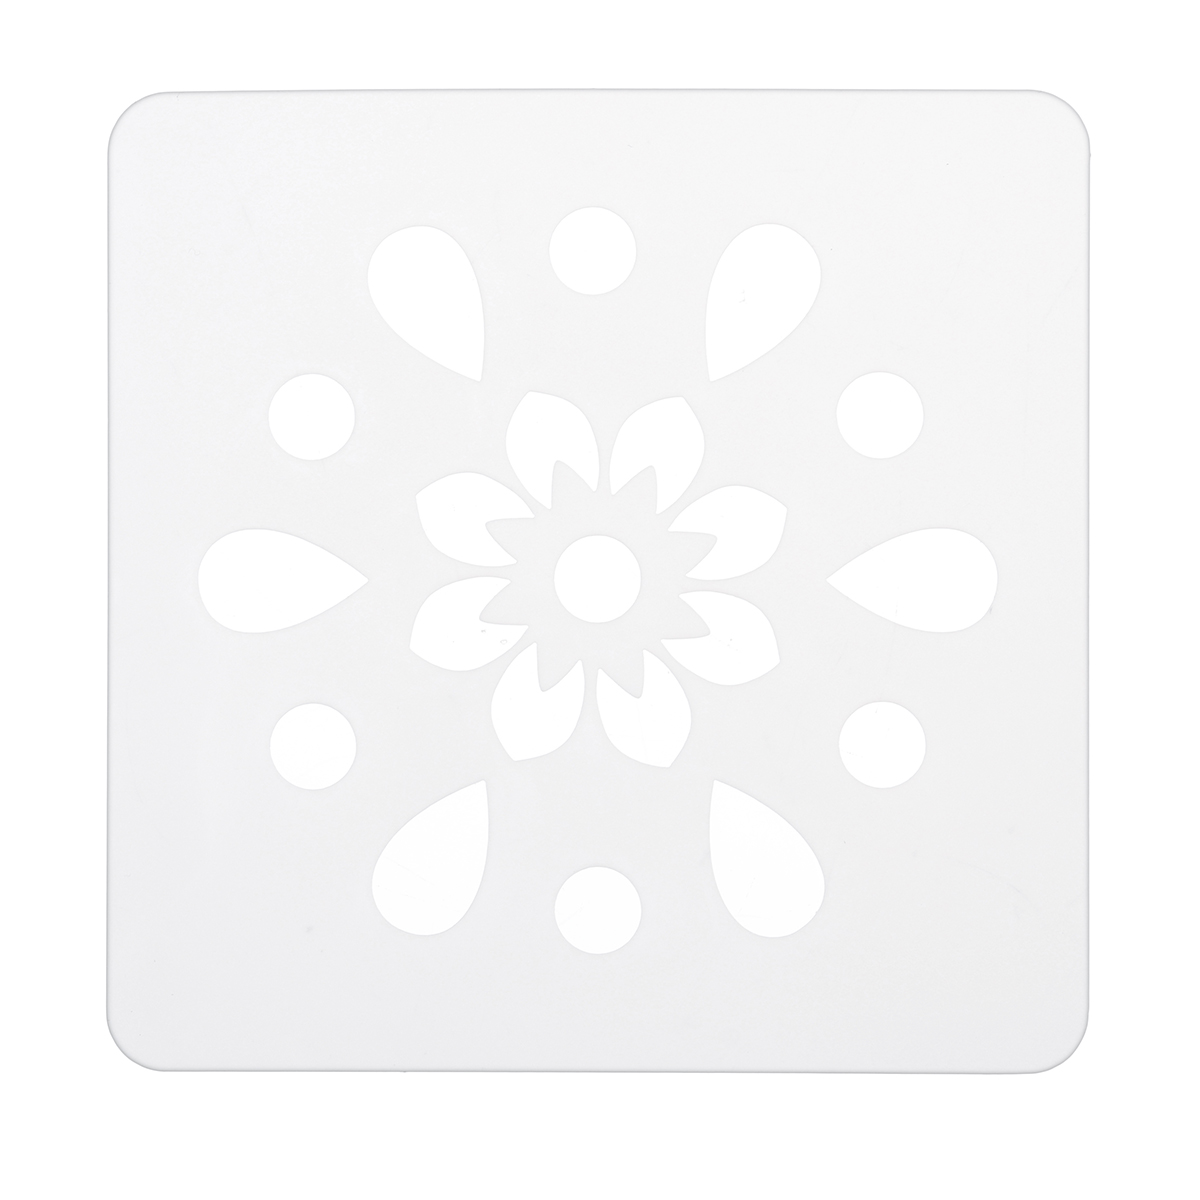 13x13cm-16Pcs-White-Plastic-Mandala-Paint-Tray-Openwork-Painting-Template-1708803-7